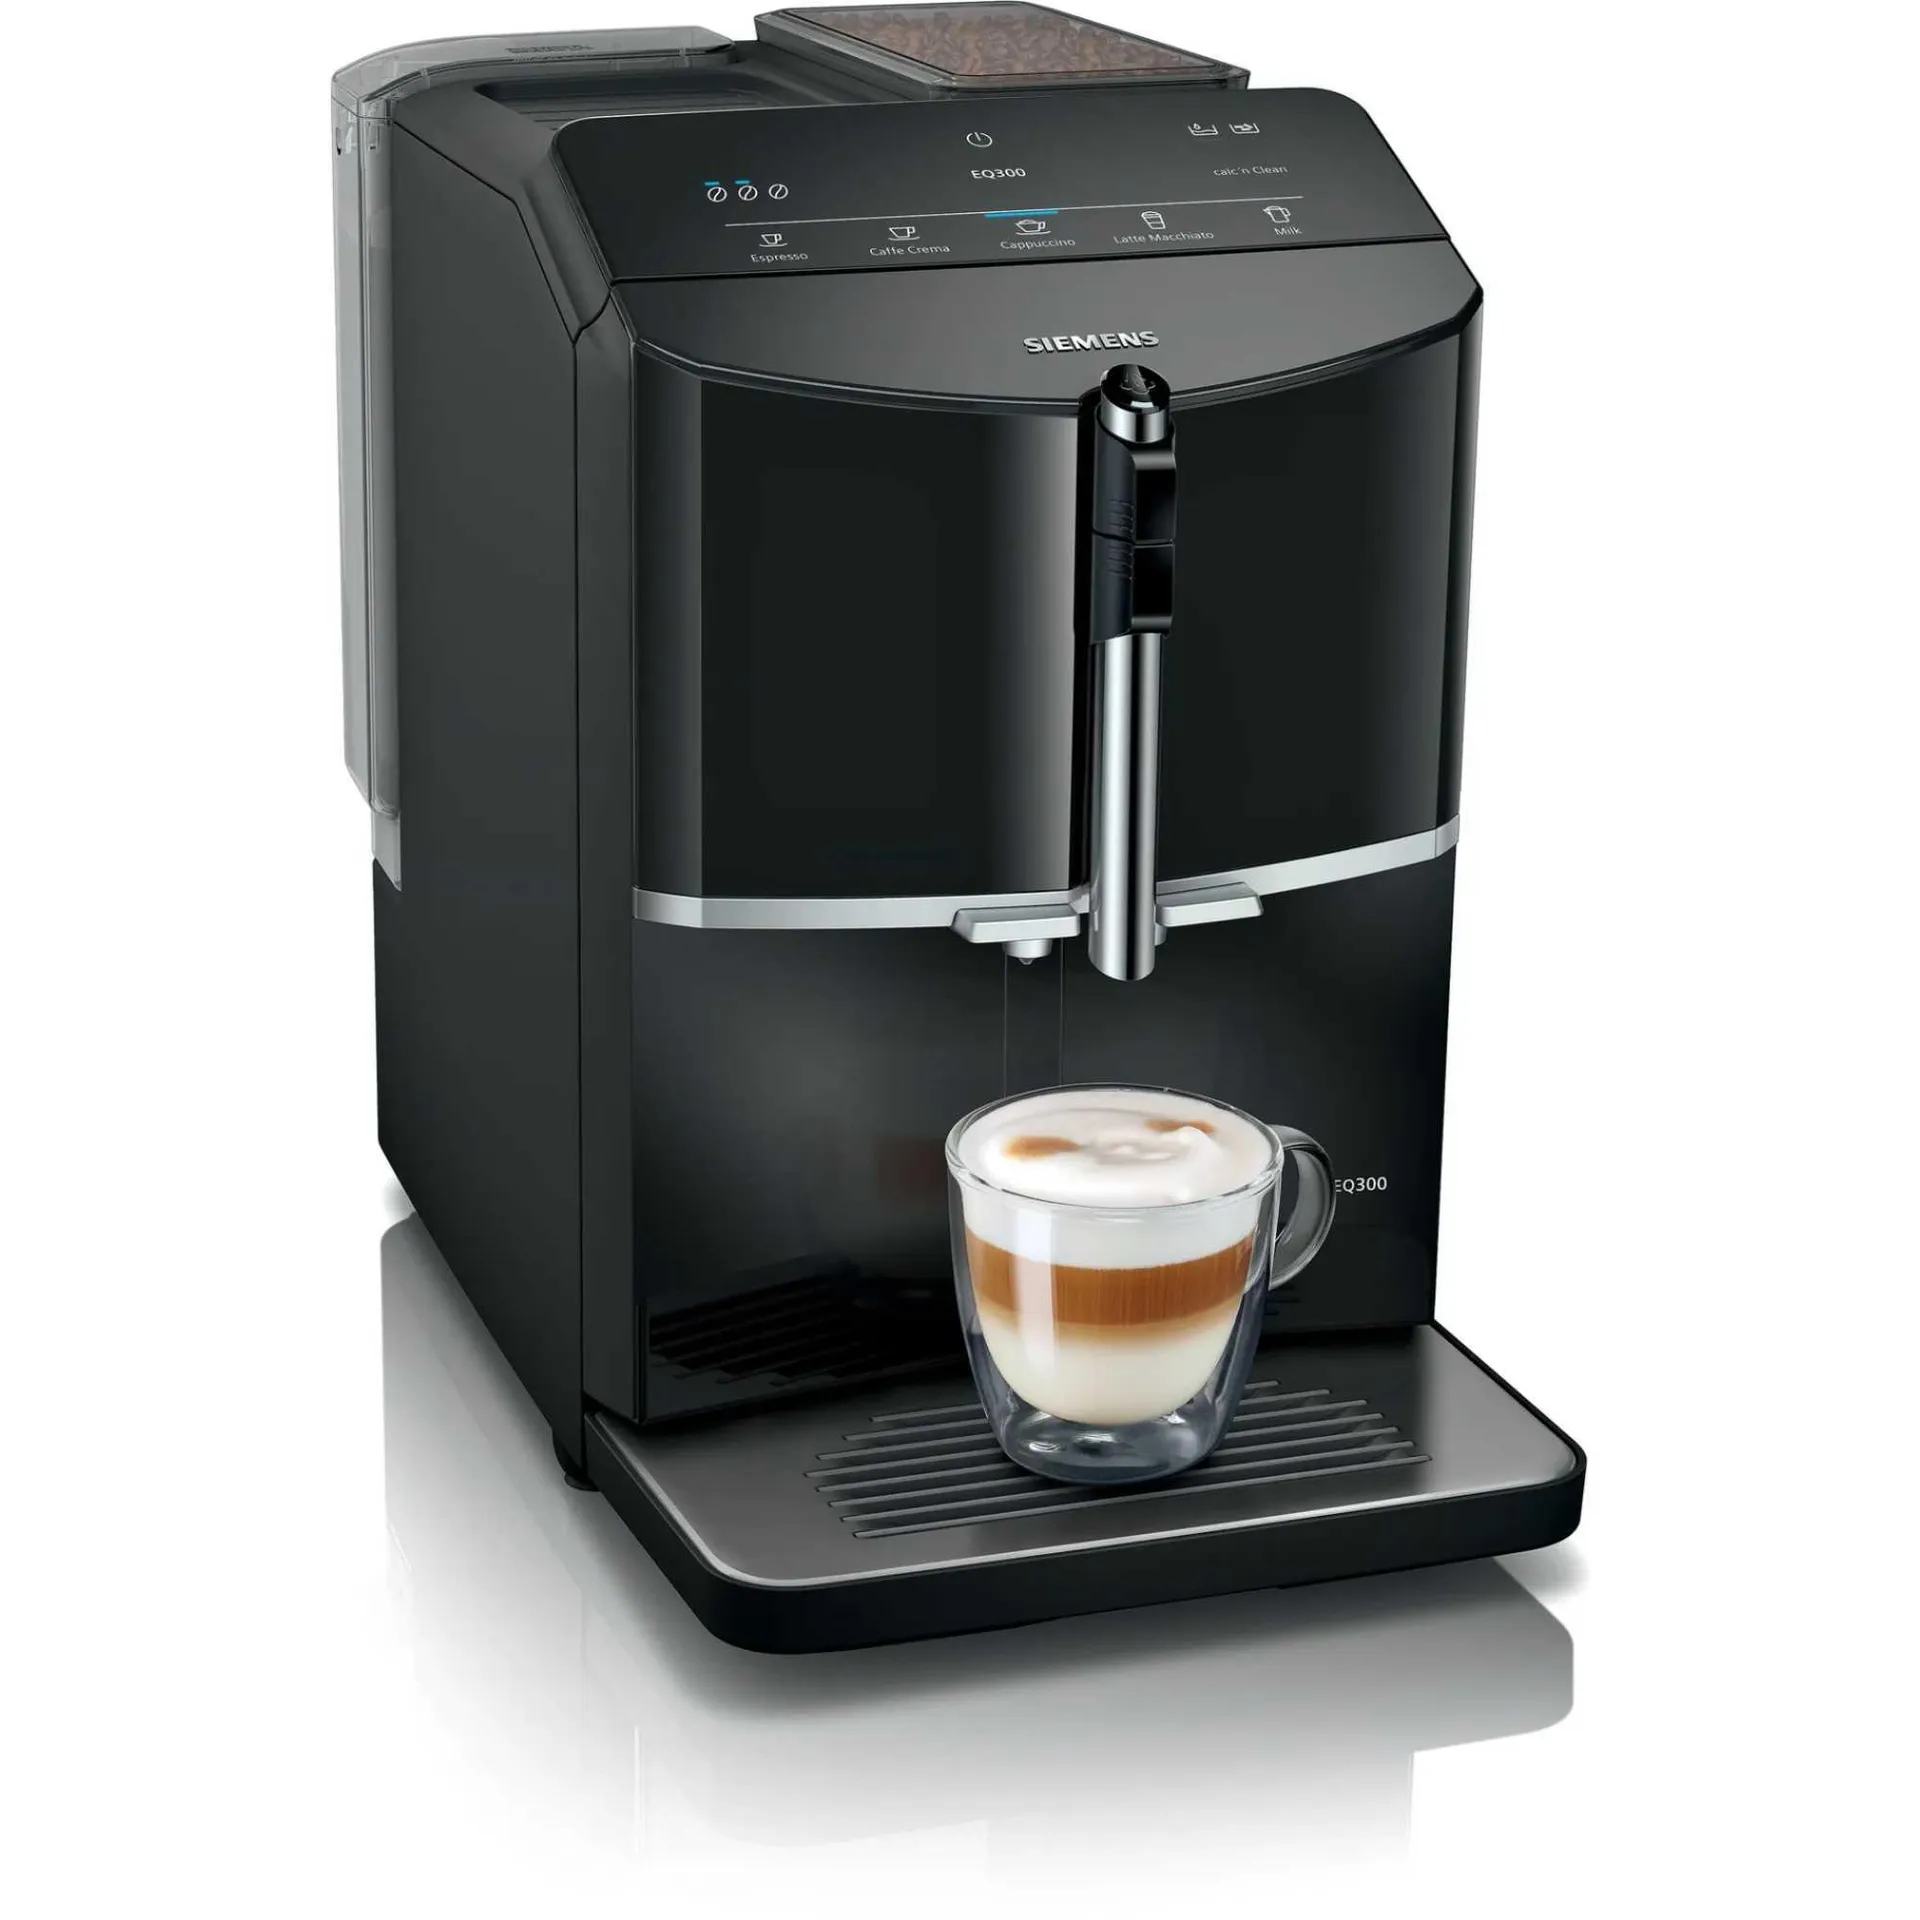 Siemens TF301G19 Fully automatic coffee machine - Black